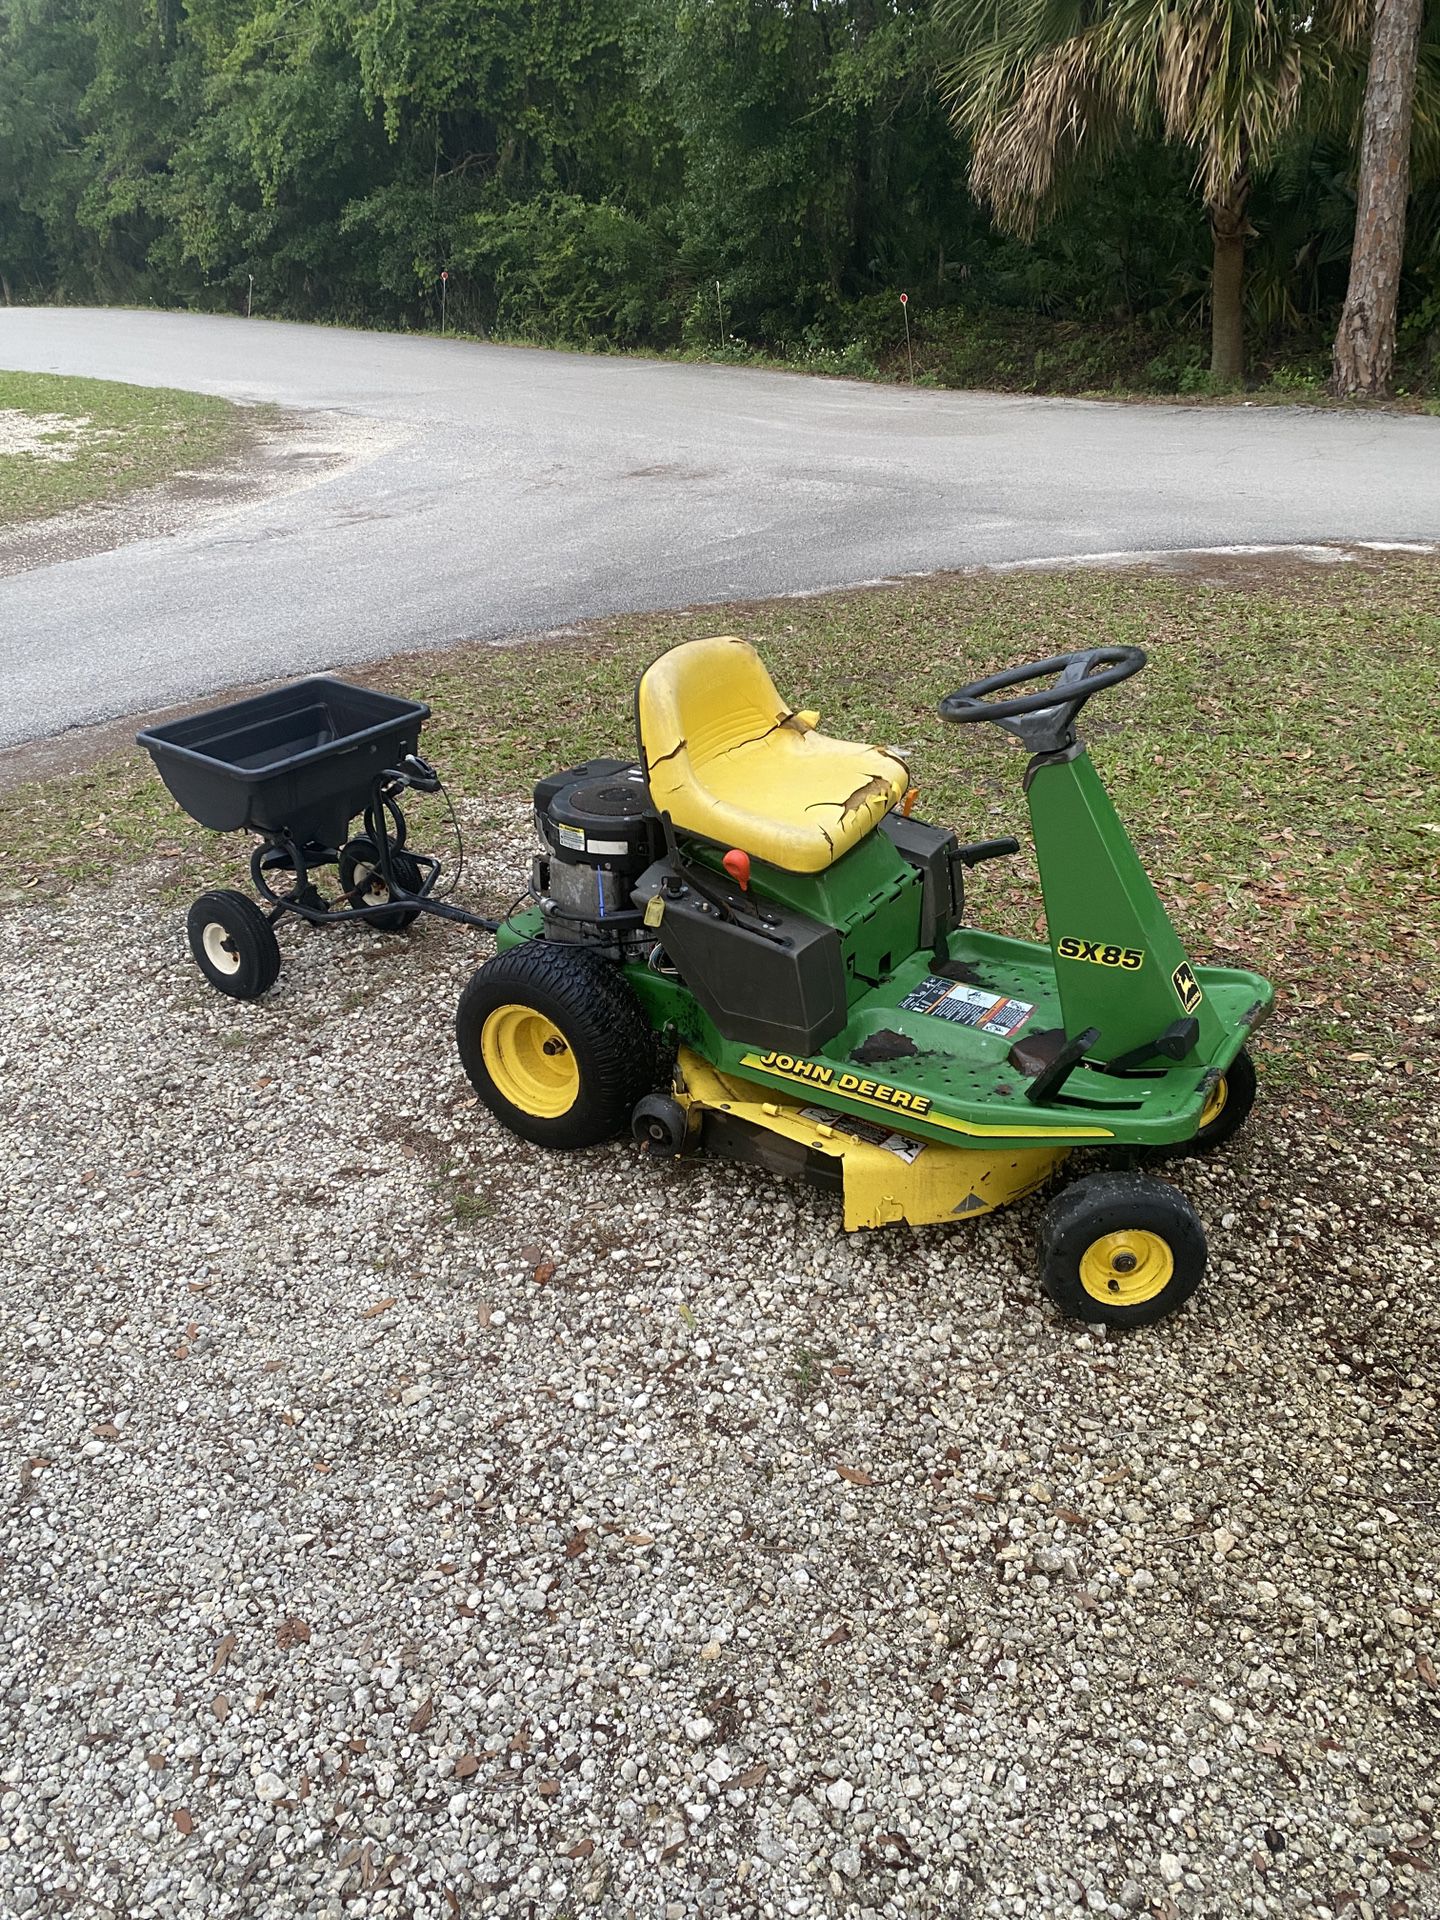 John Deere SX85 13HP 30” Gas Riding Lawn Mower With Seeder/Fertilizer